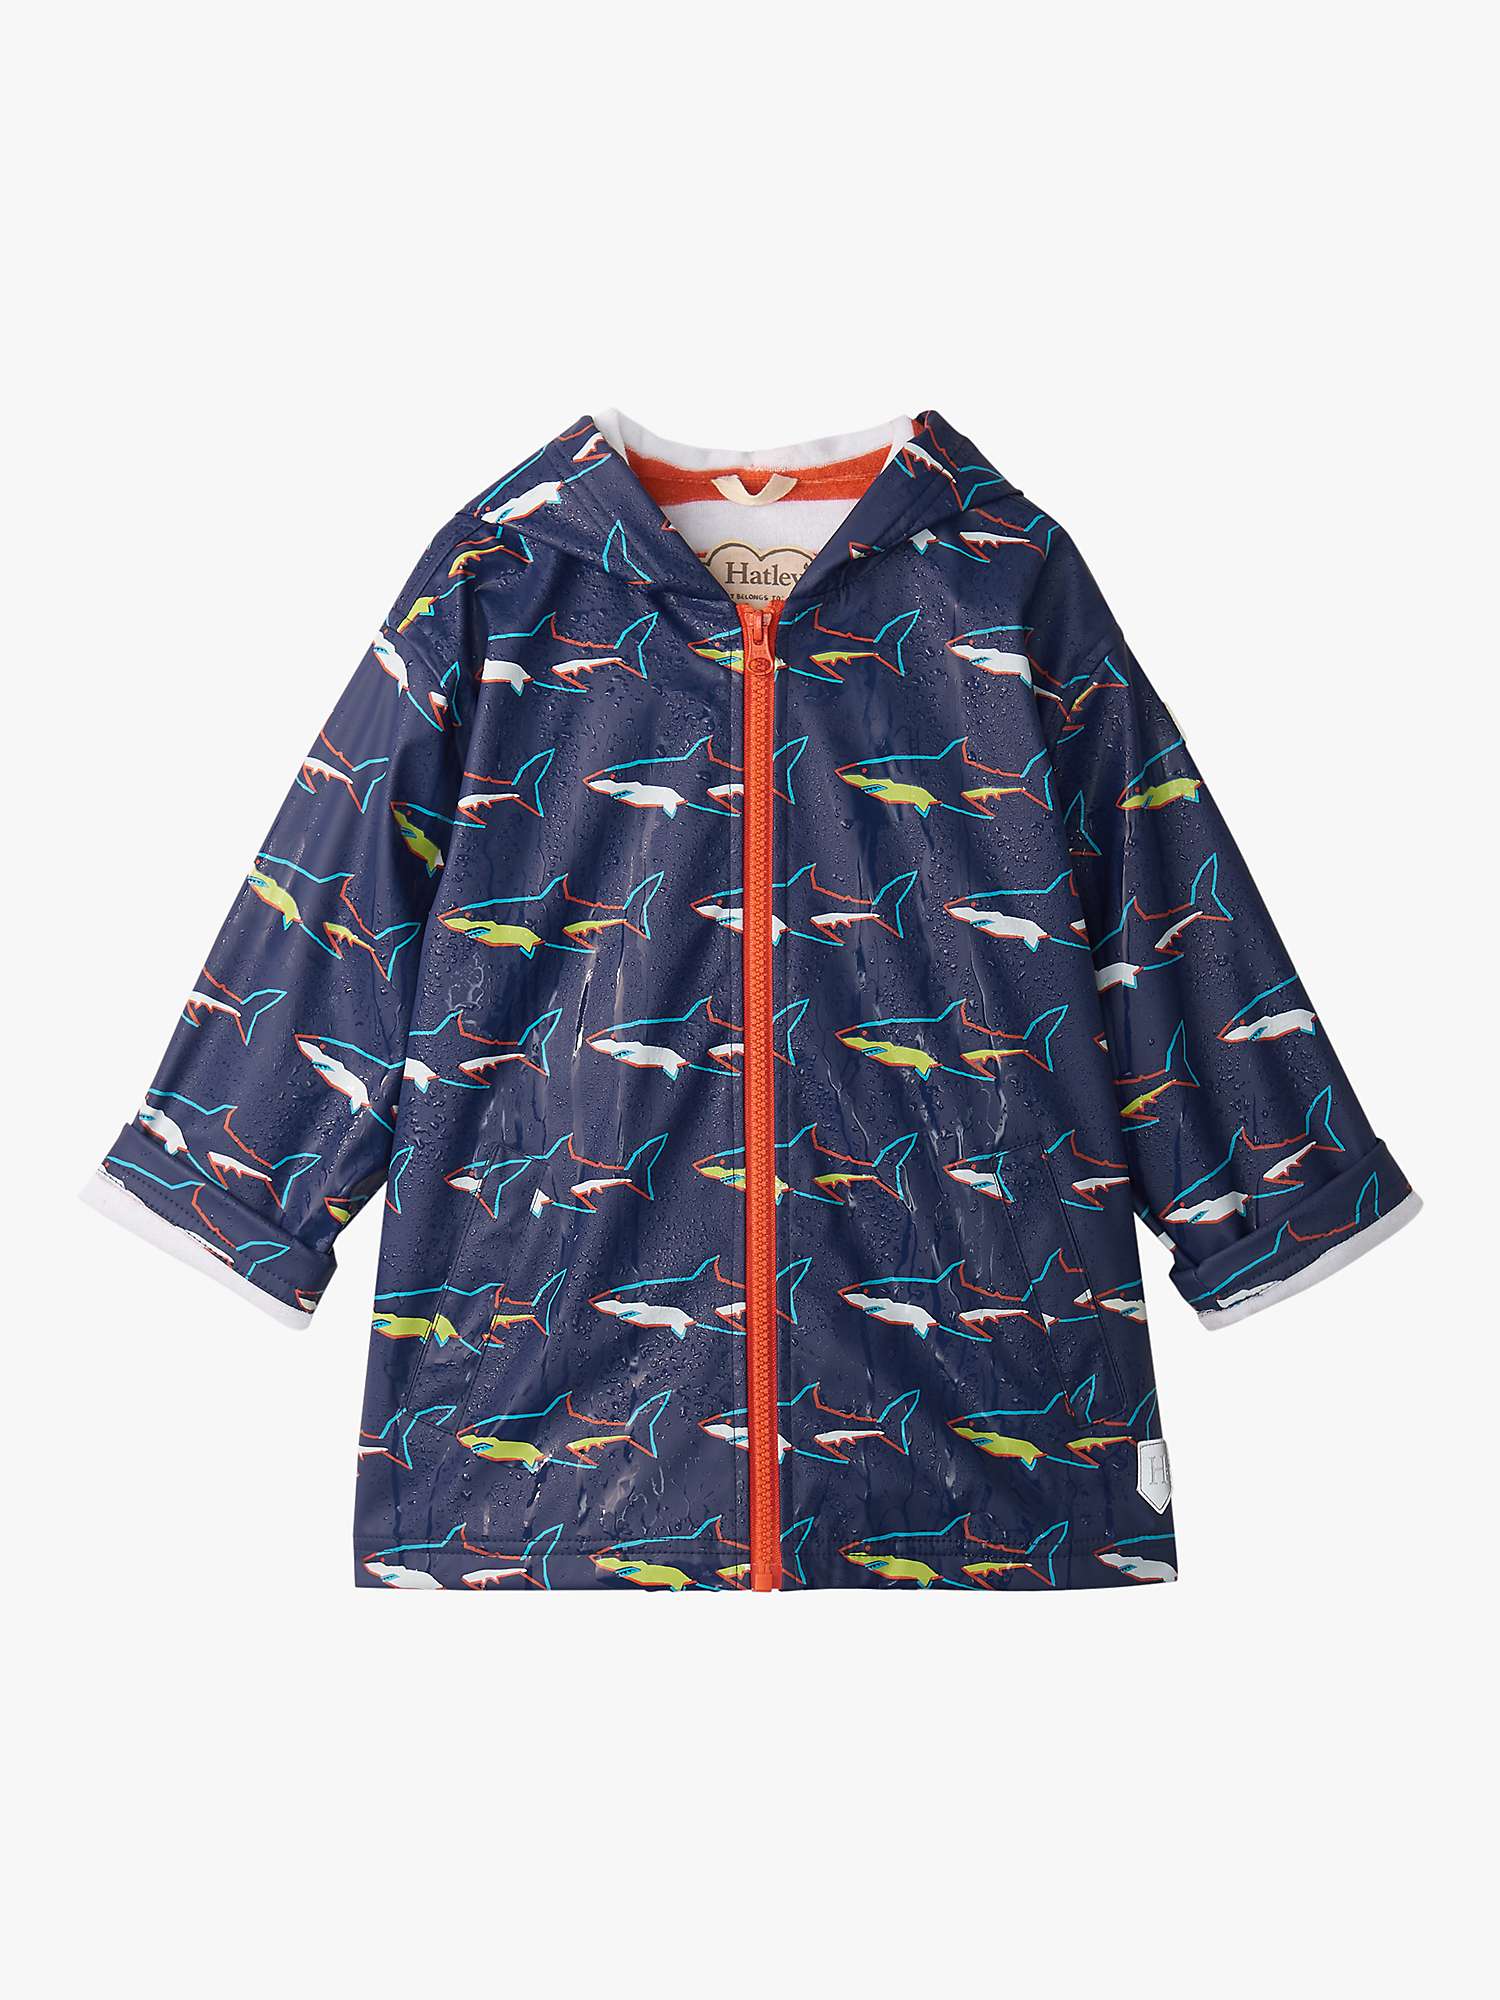 Buy Hatley Kids' Sharks Print Colour Change Zip Up Rain Jacket, Patriot Blue Online at johnlewis.com